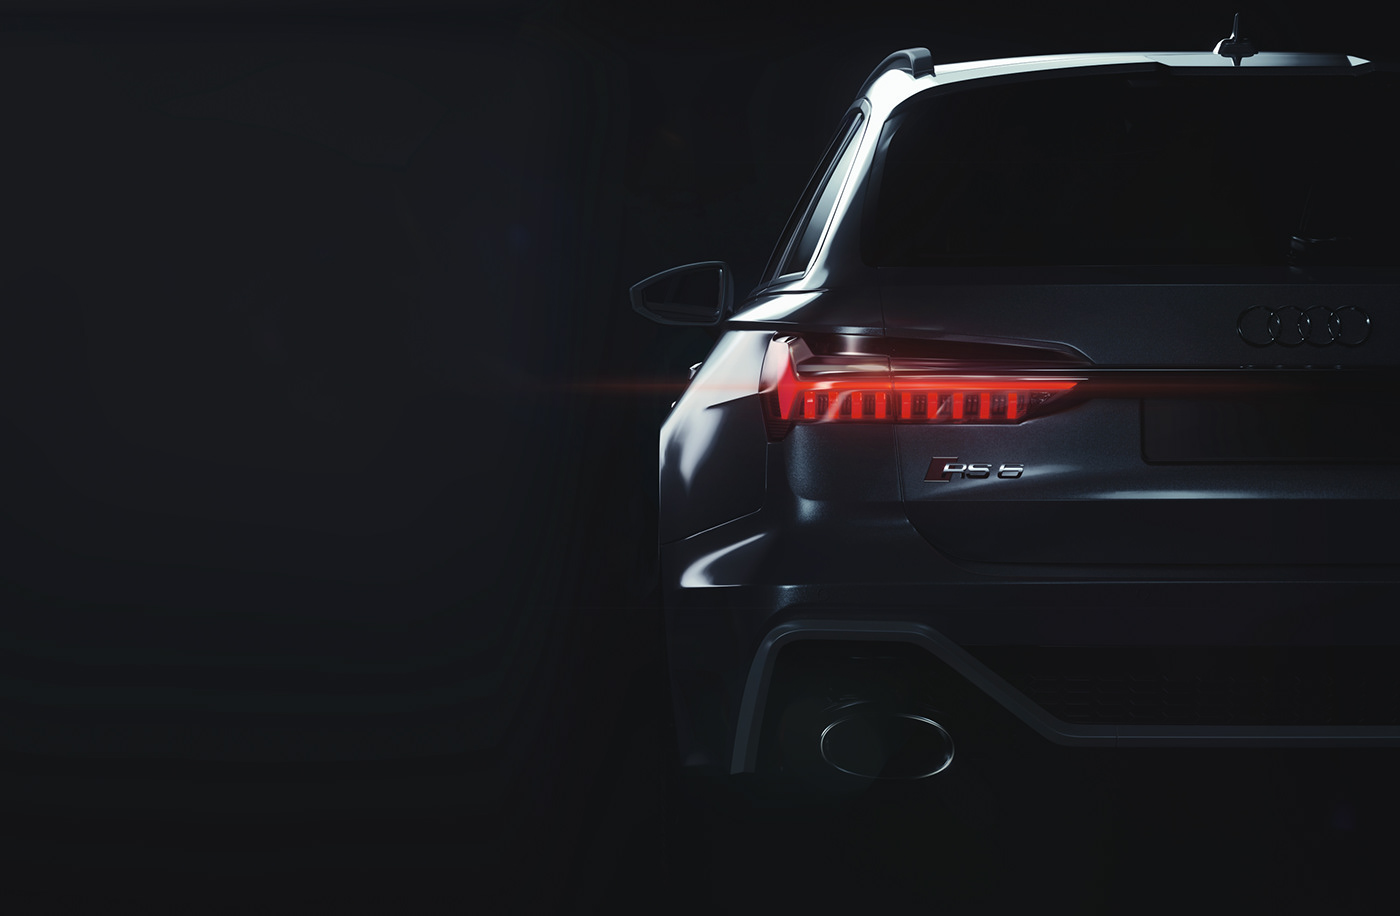 2020 Audi RS6 | CGI | HDR Light Studio on Behance